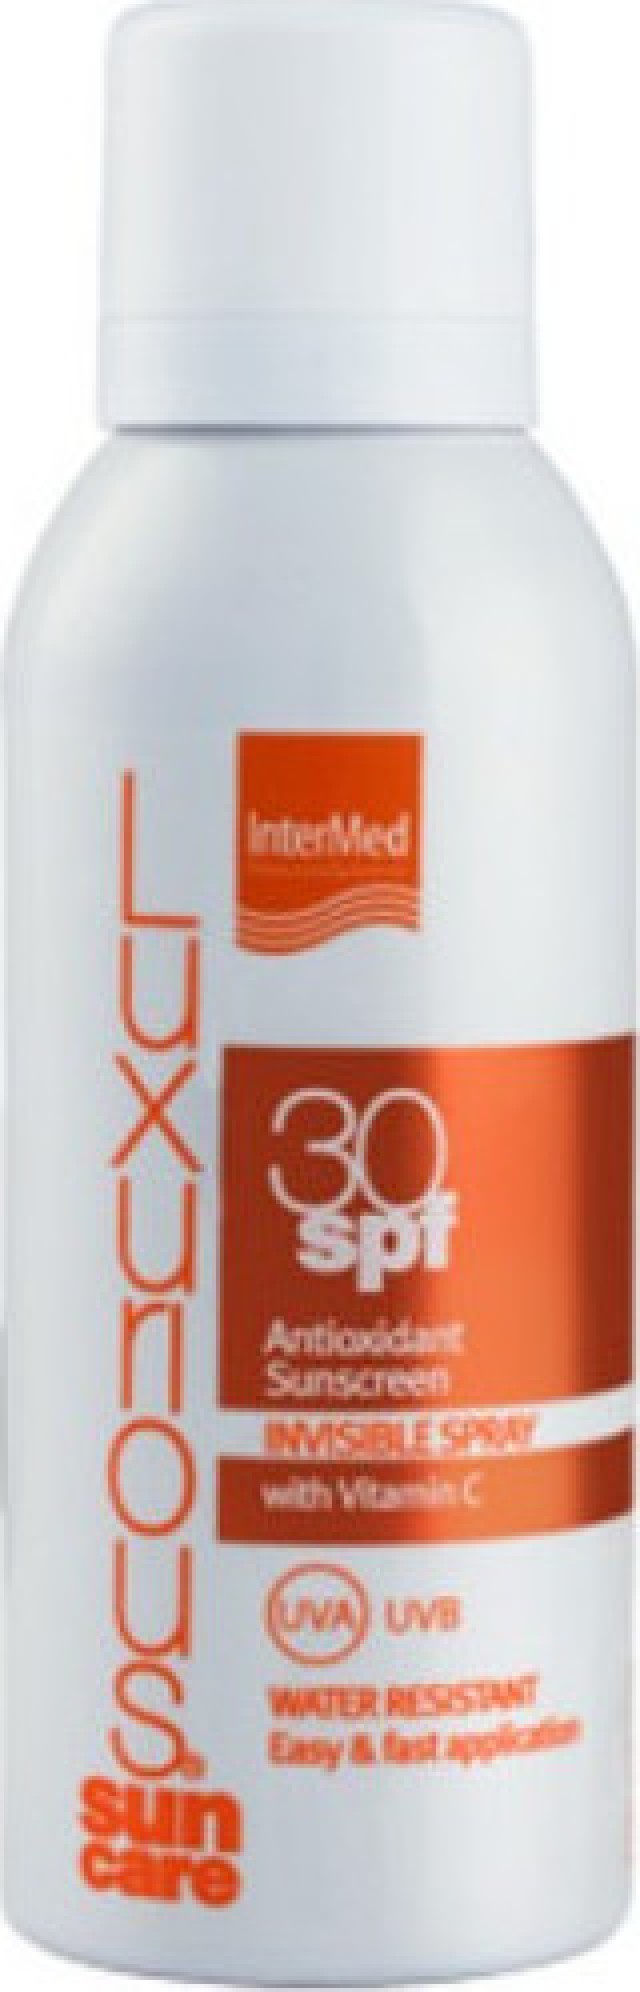 Intermed Luxurious Sunscreen Invisible SPF30 Body Spray Αντιηλιακή Προστασία 100ml